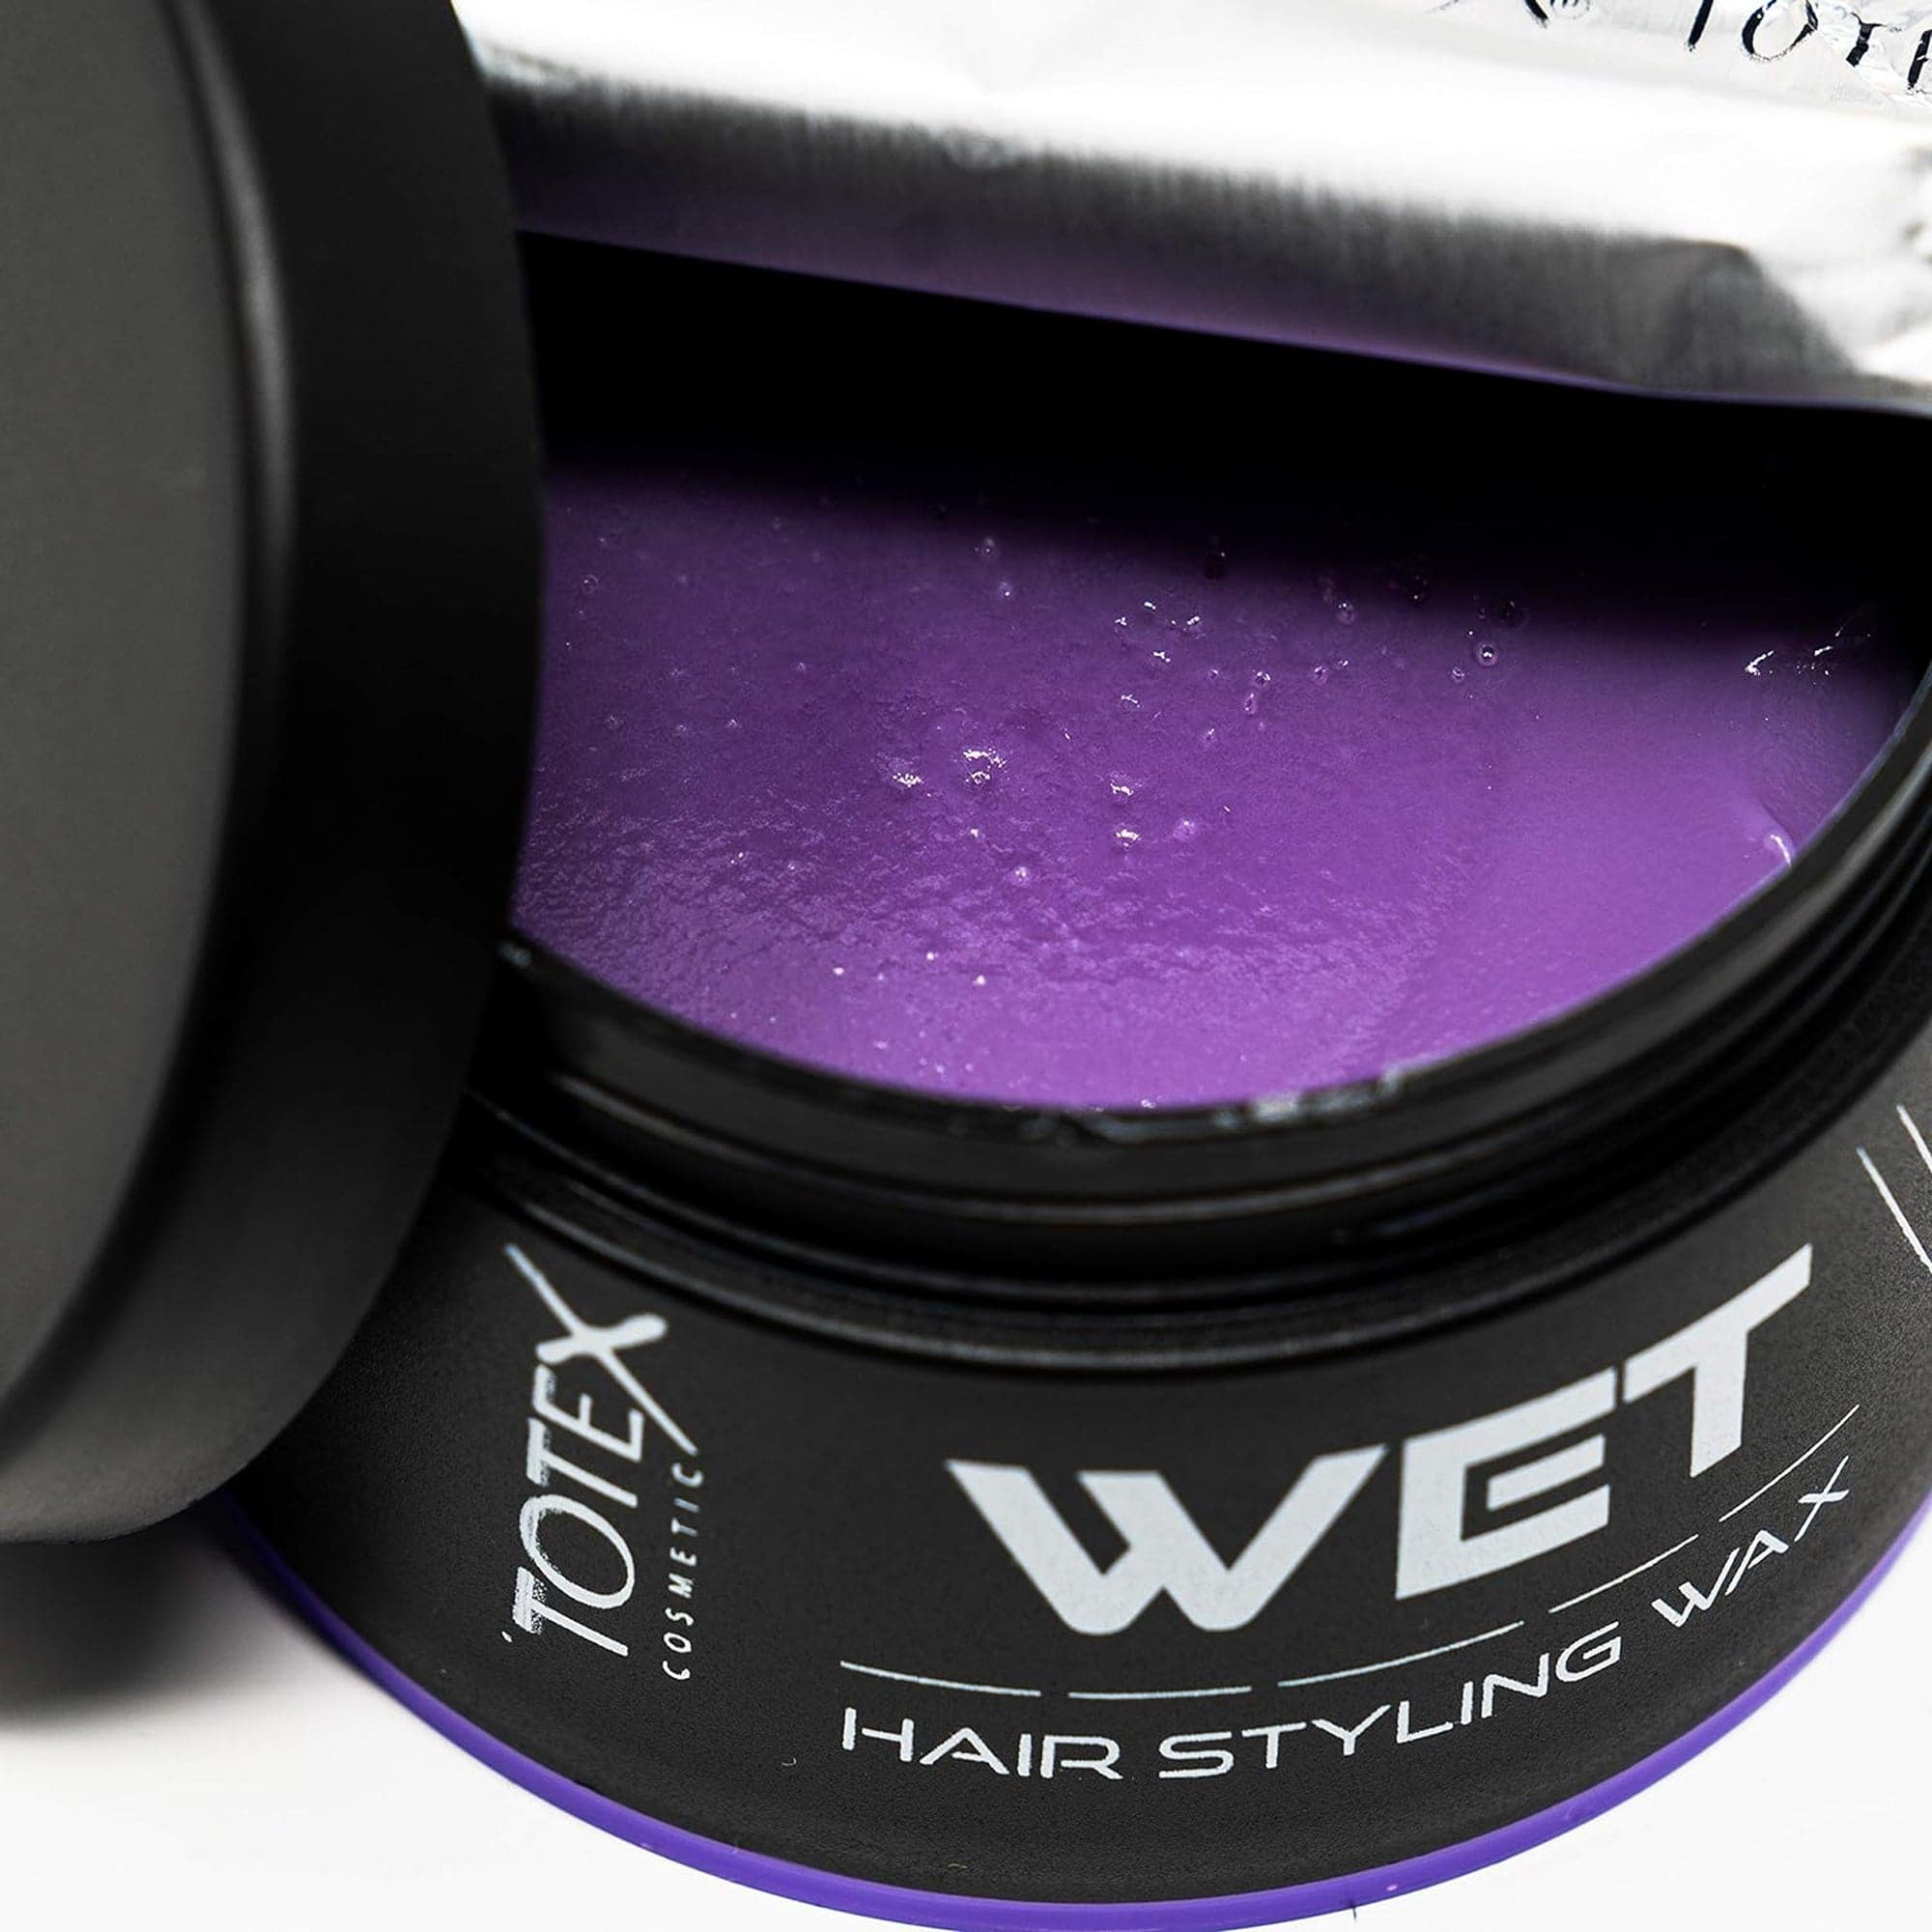 Totex - Hair Styling Wax Wet 150ml